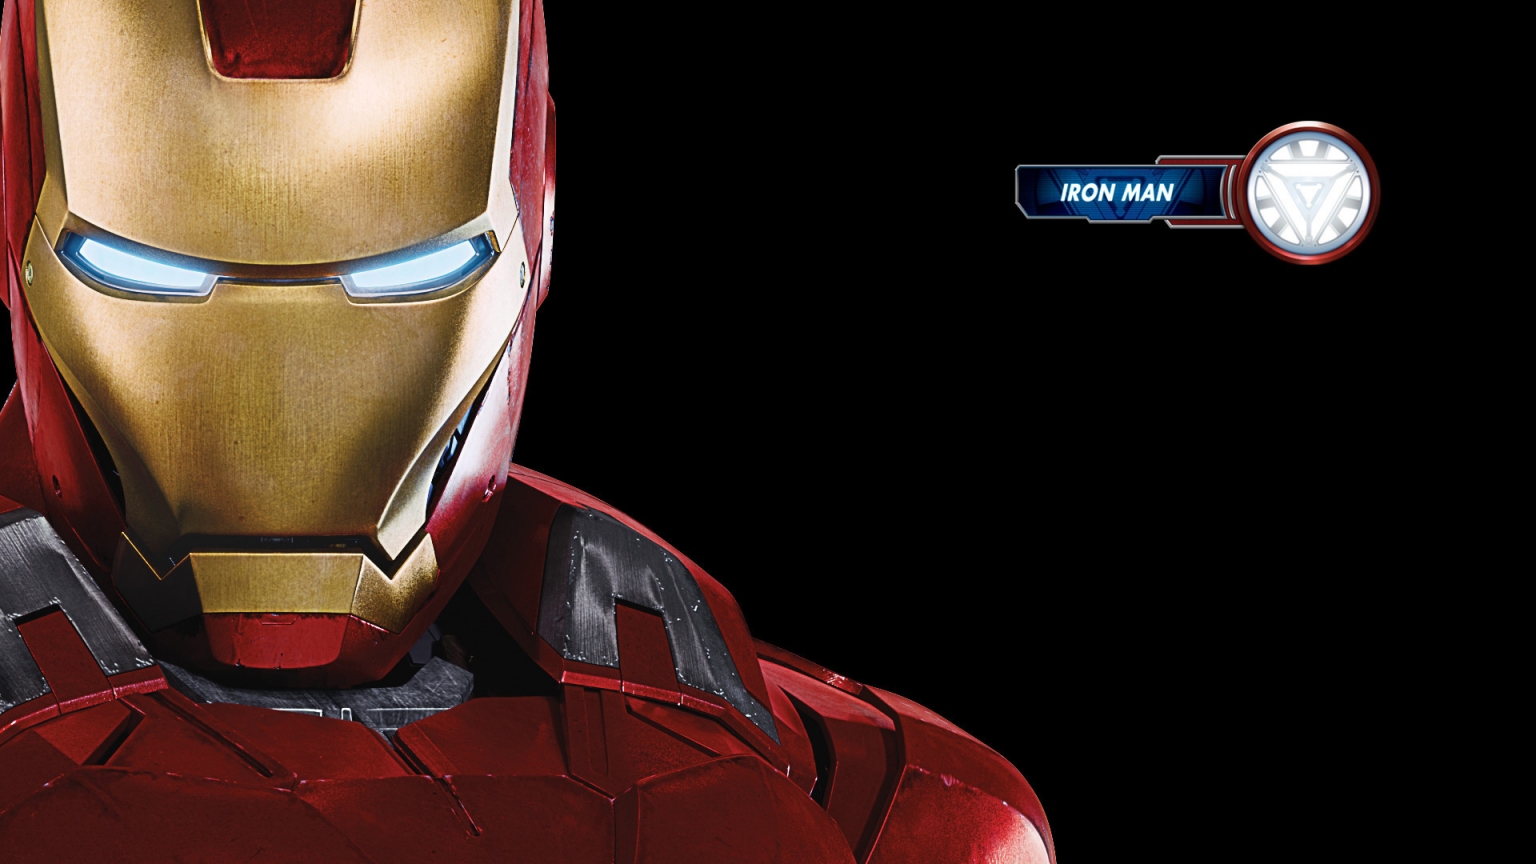 The Avengers Iron Man for 1536 x 864 HDTV resolution